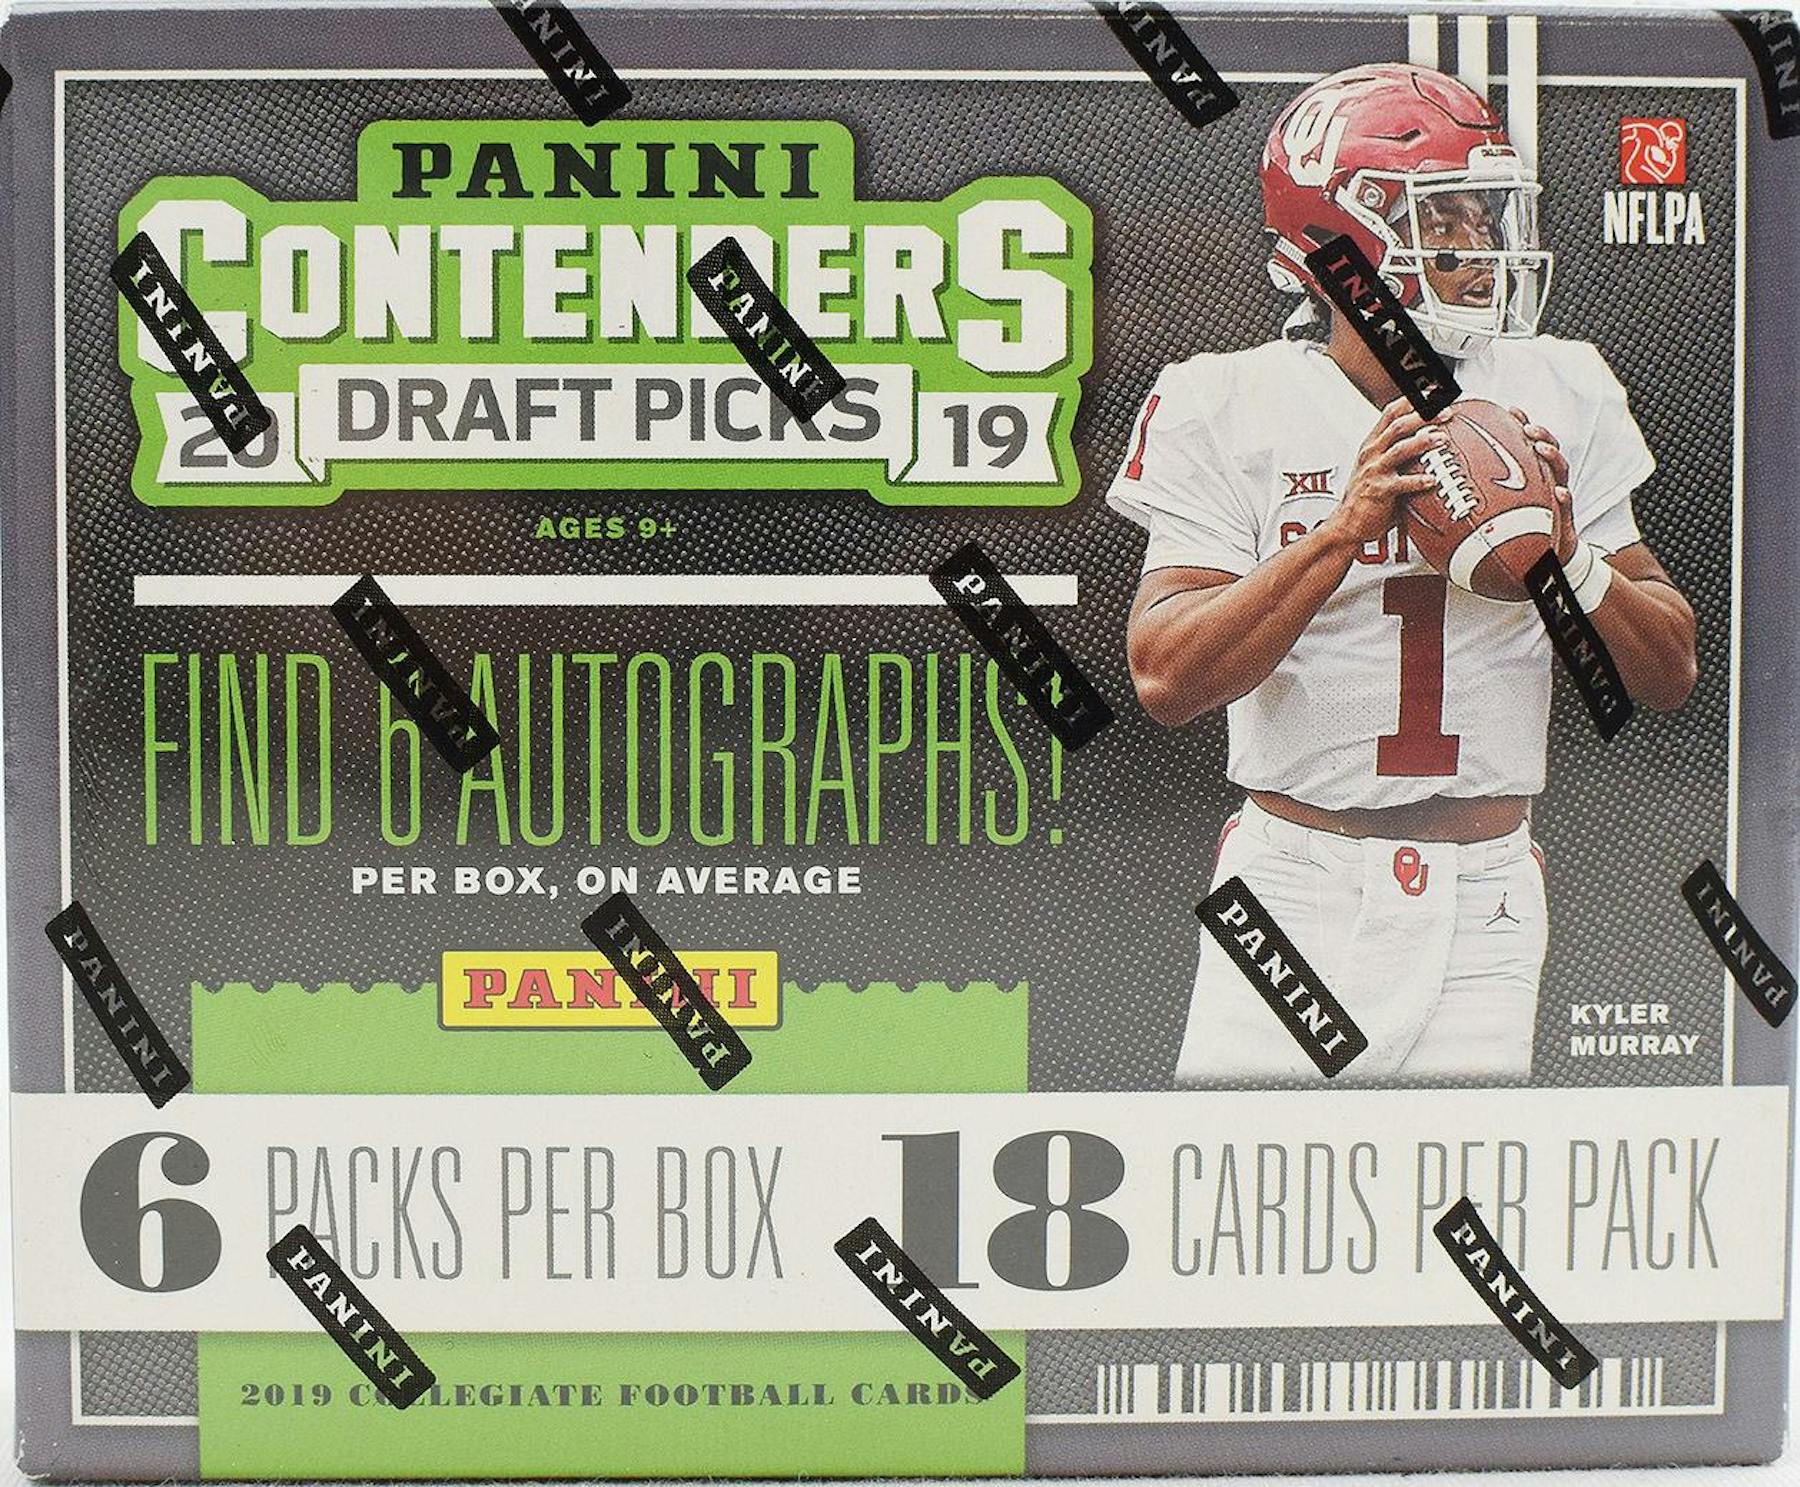 2019 Panini Contenders Draft Picks Football Hobby Box Da Card